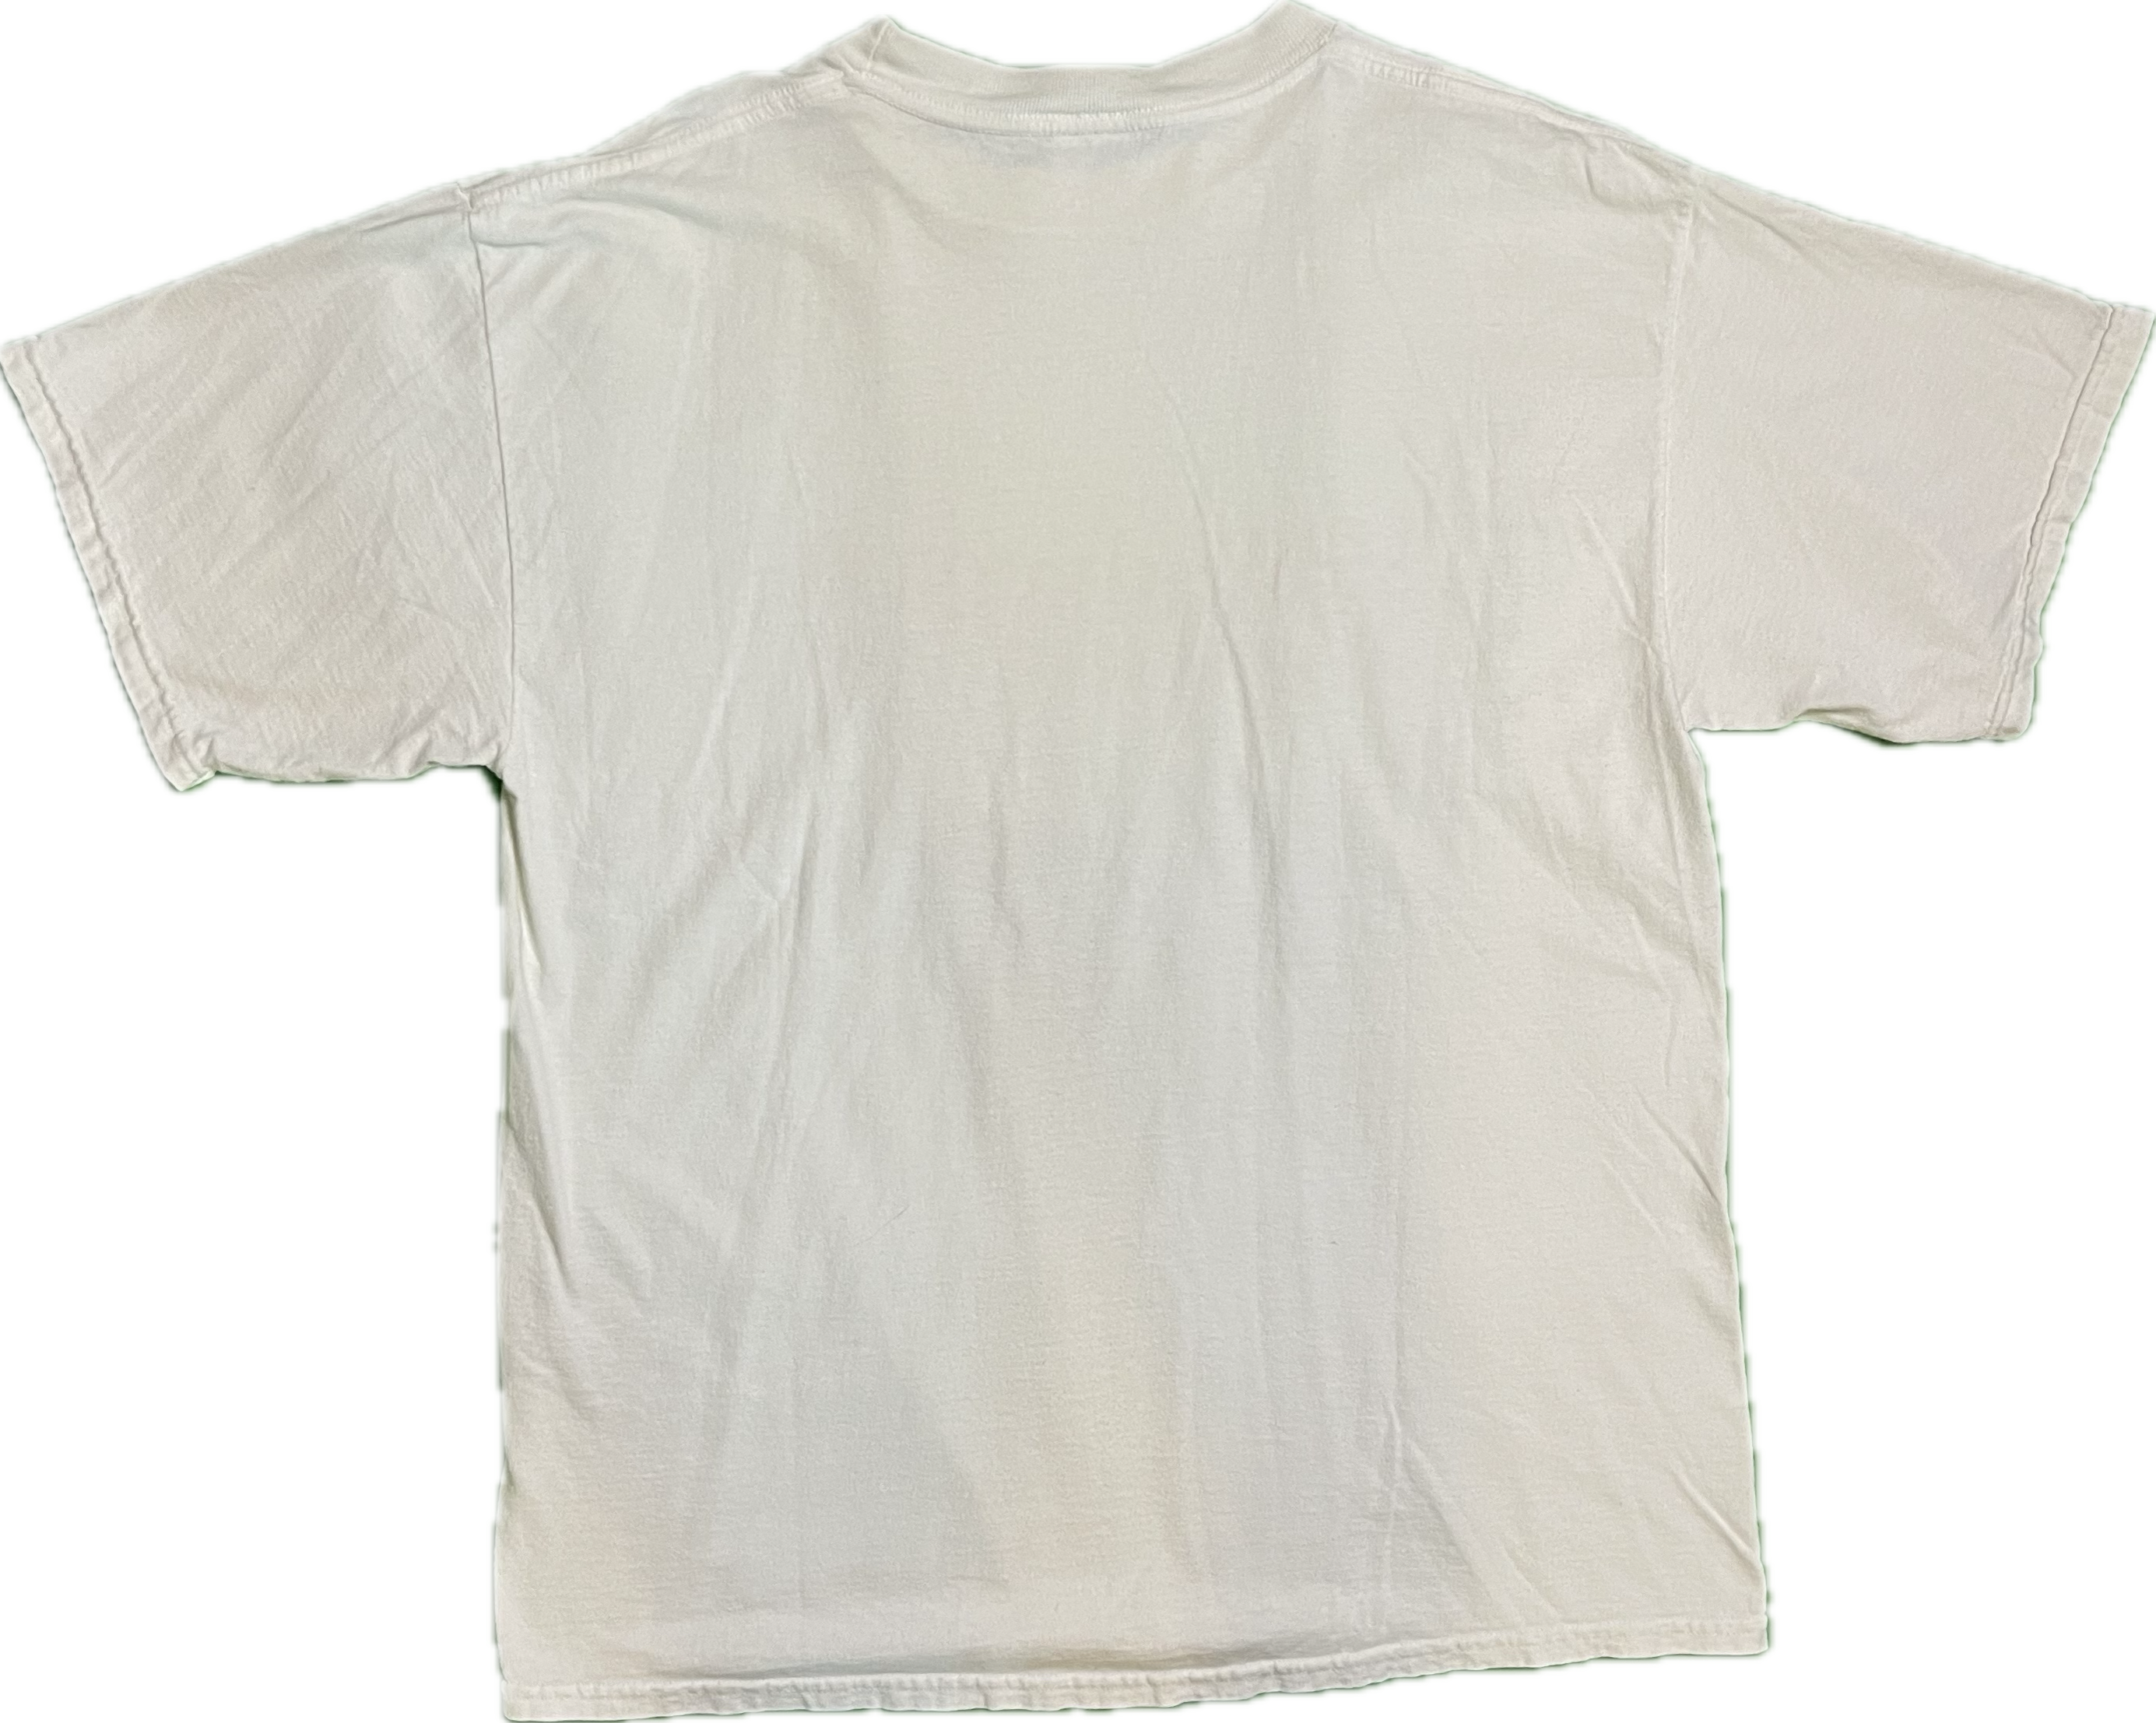 90&#39;s Washington University of St Louis Vintage T-Shirt